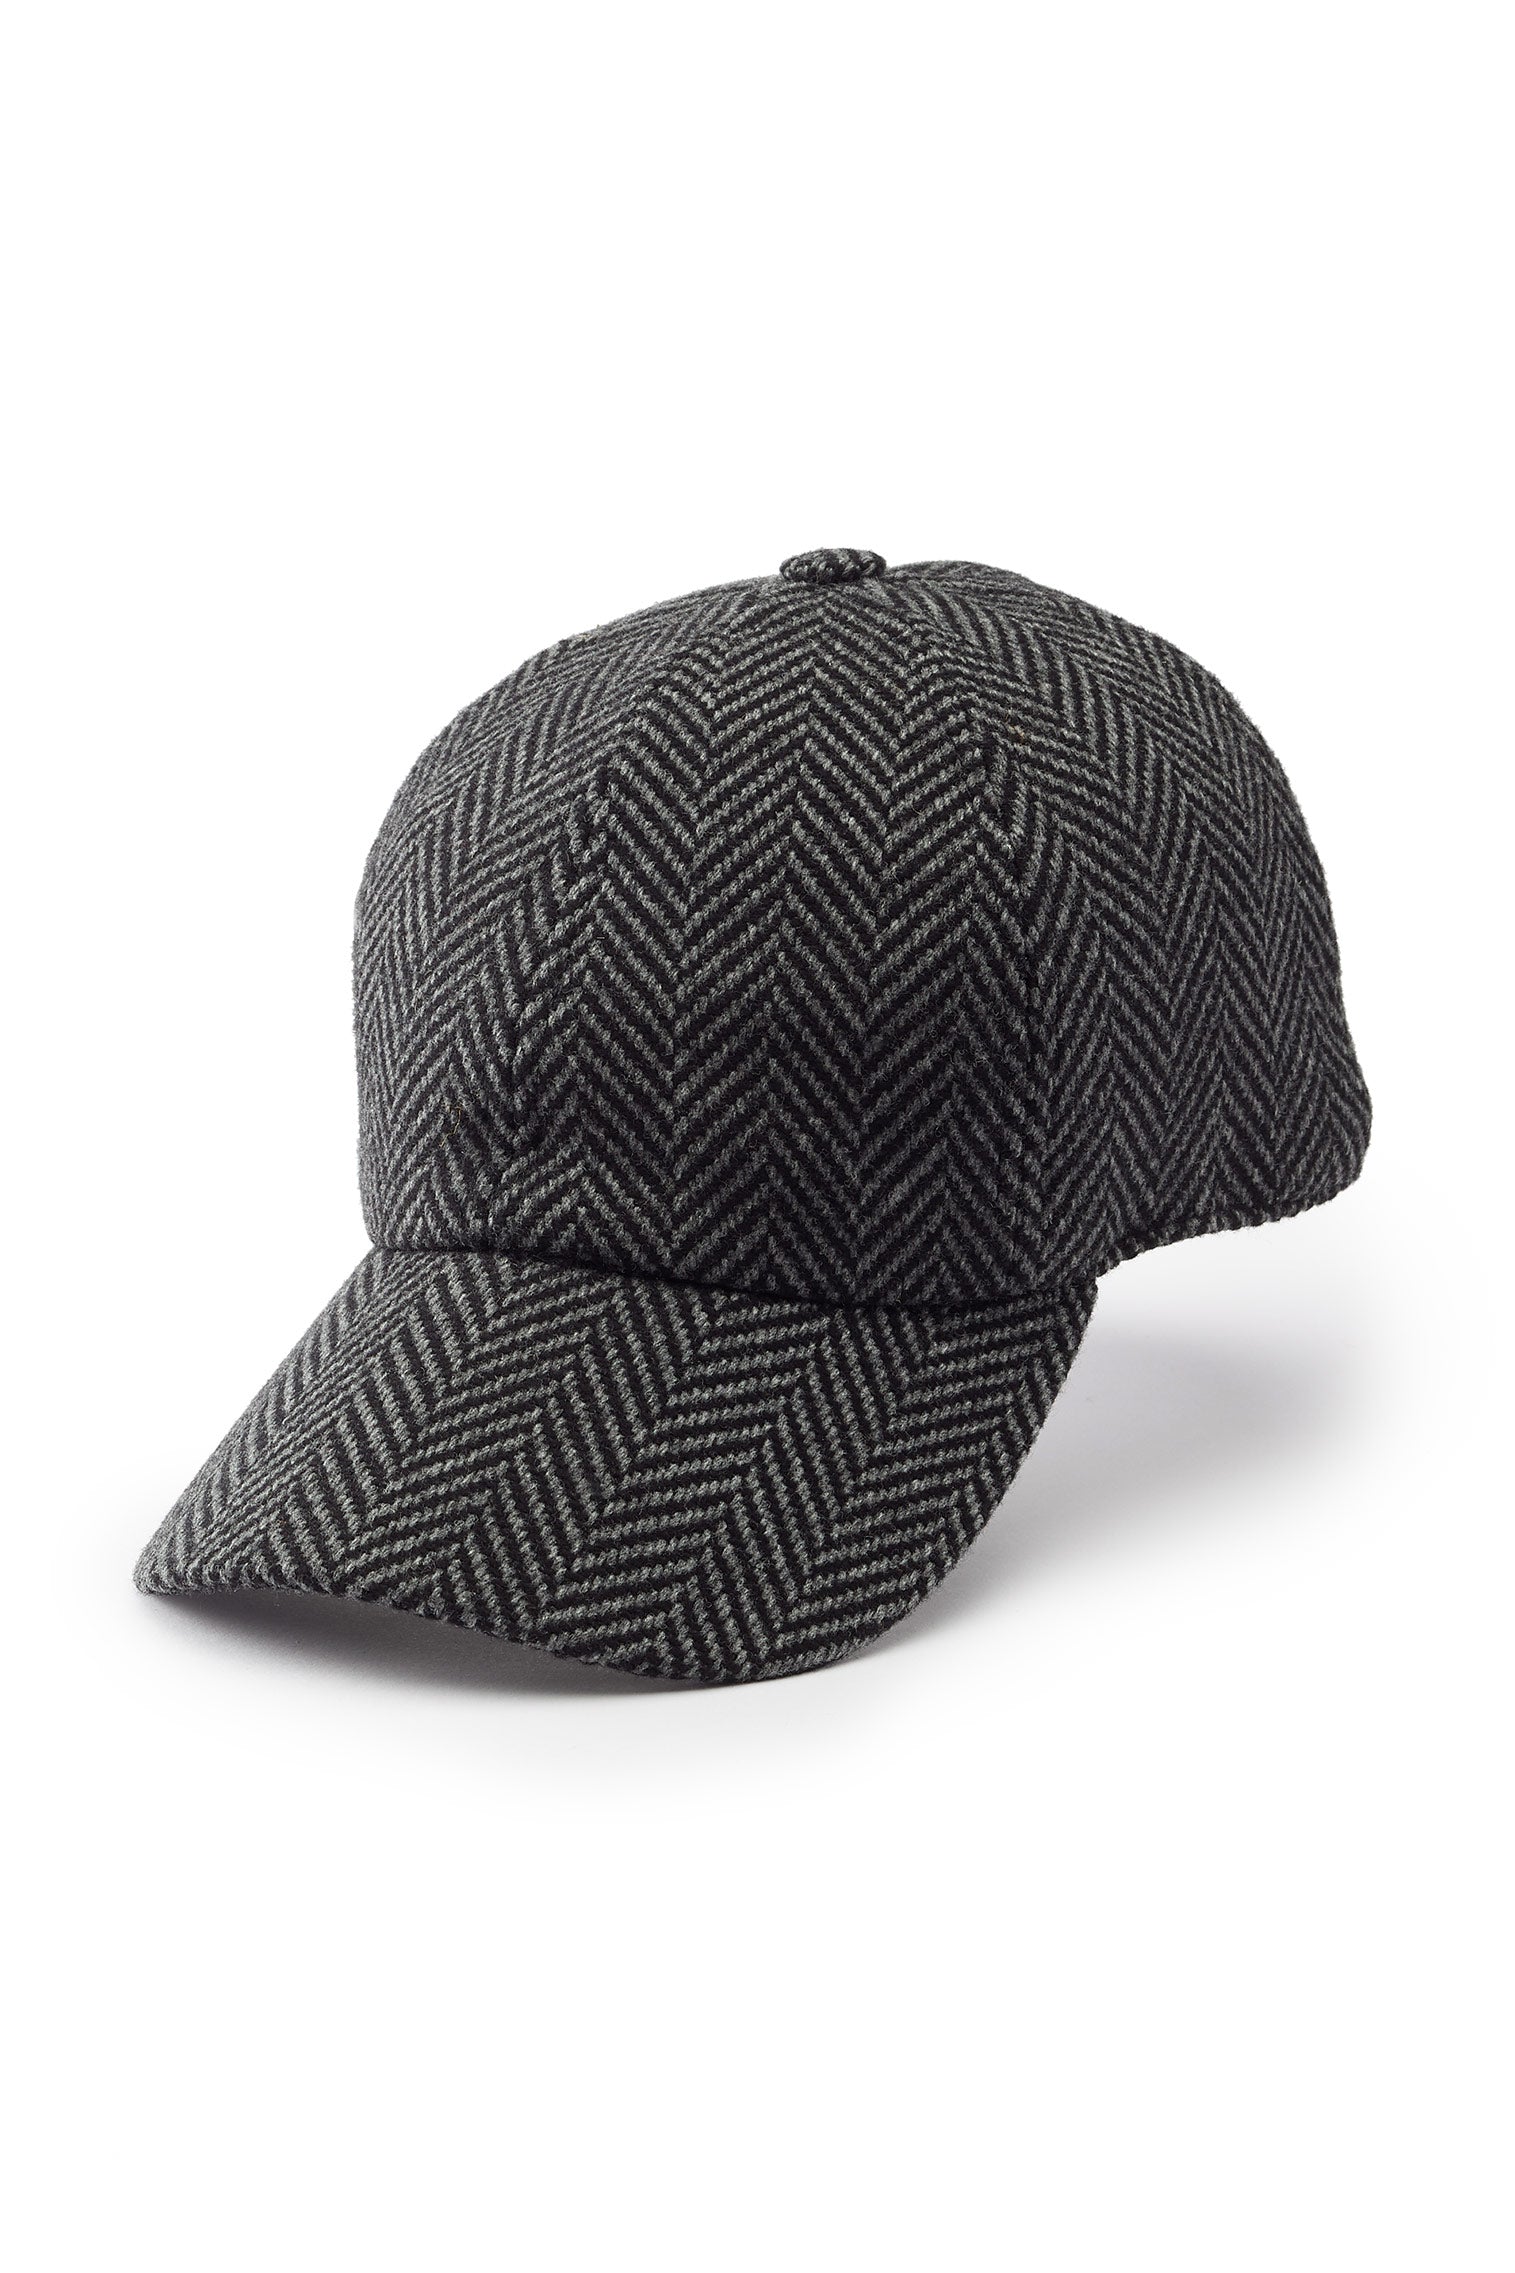 Escorial Wool Baseball Cap - Escorial Wool Hats - Lock & Co. Hatters London UK